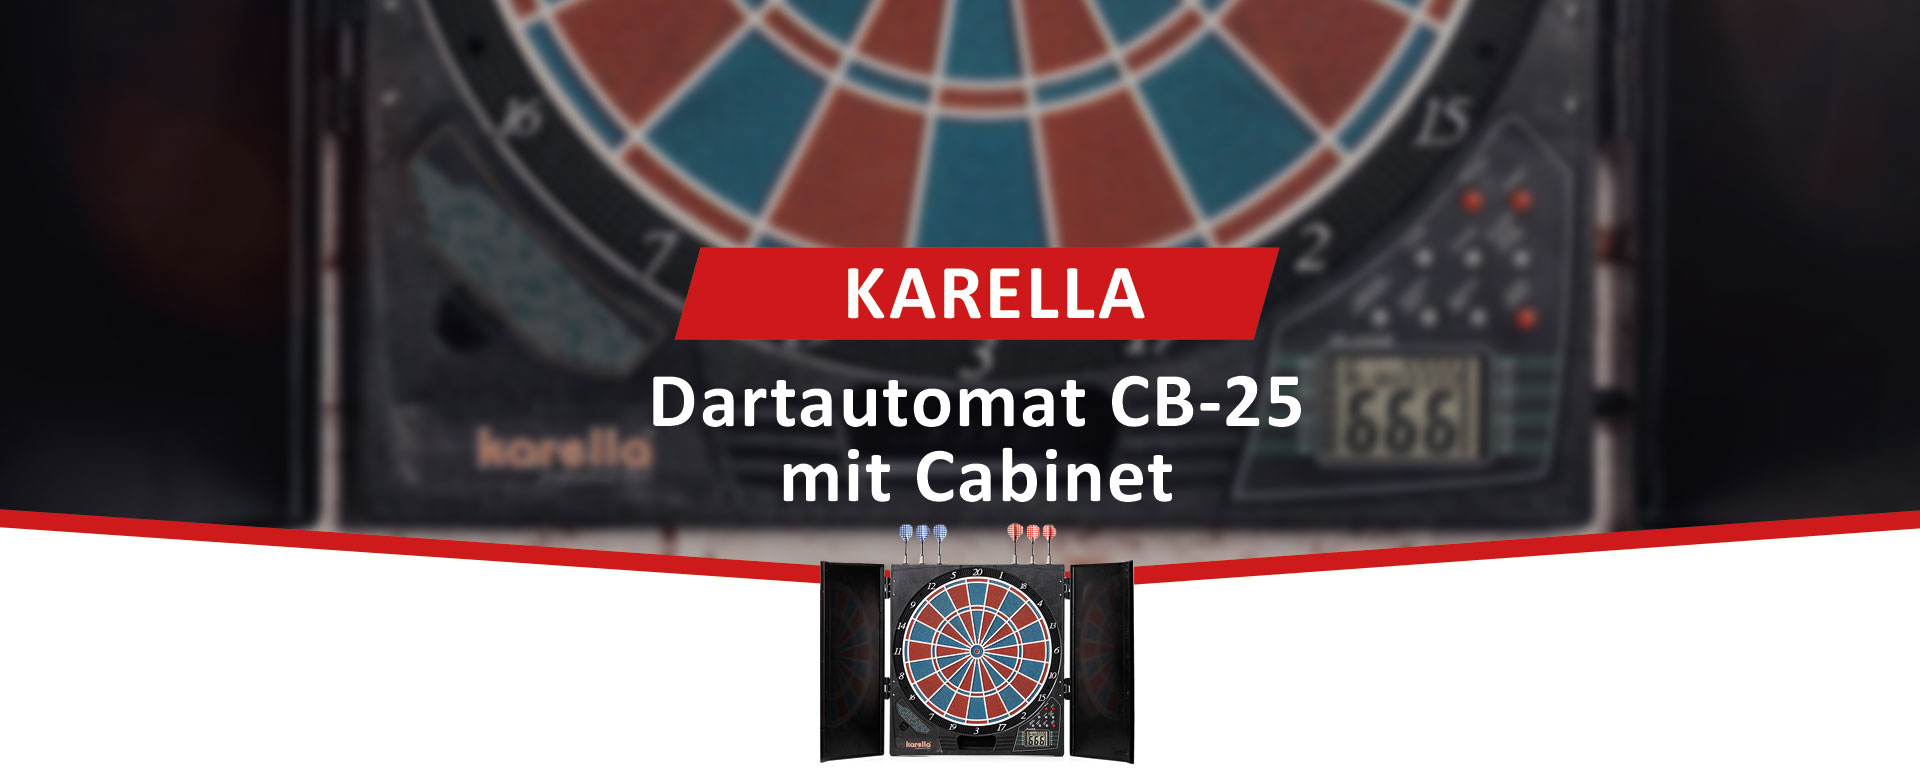 KARELLA Dartautomat CB-25 inkl. Cabinet + 2 Satz Softdarts